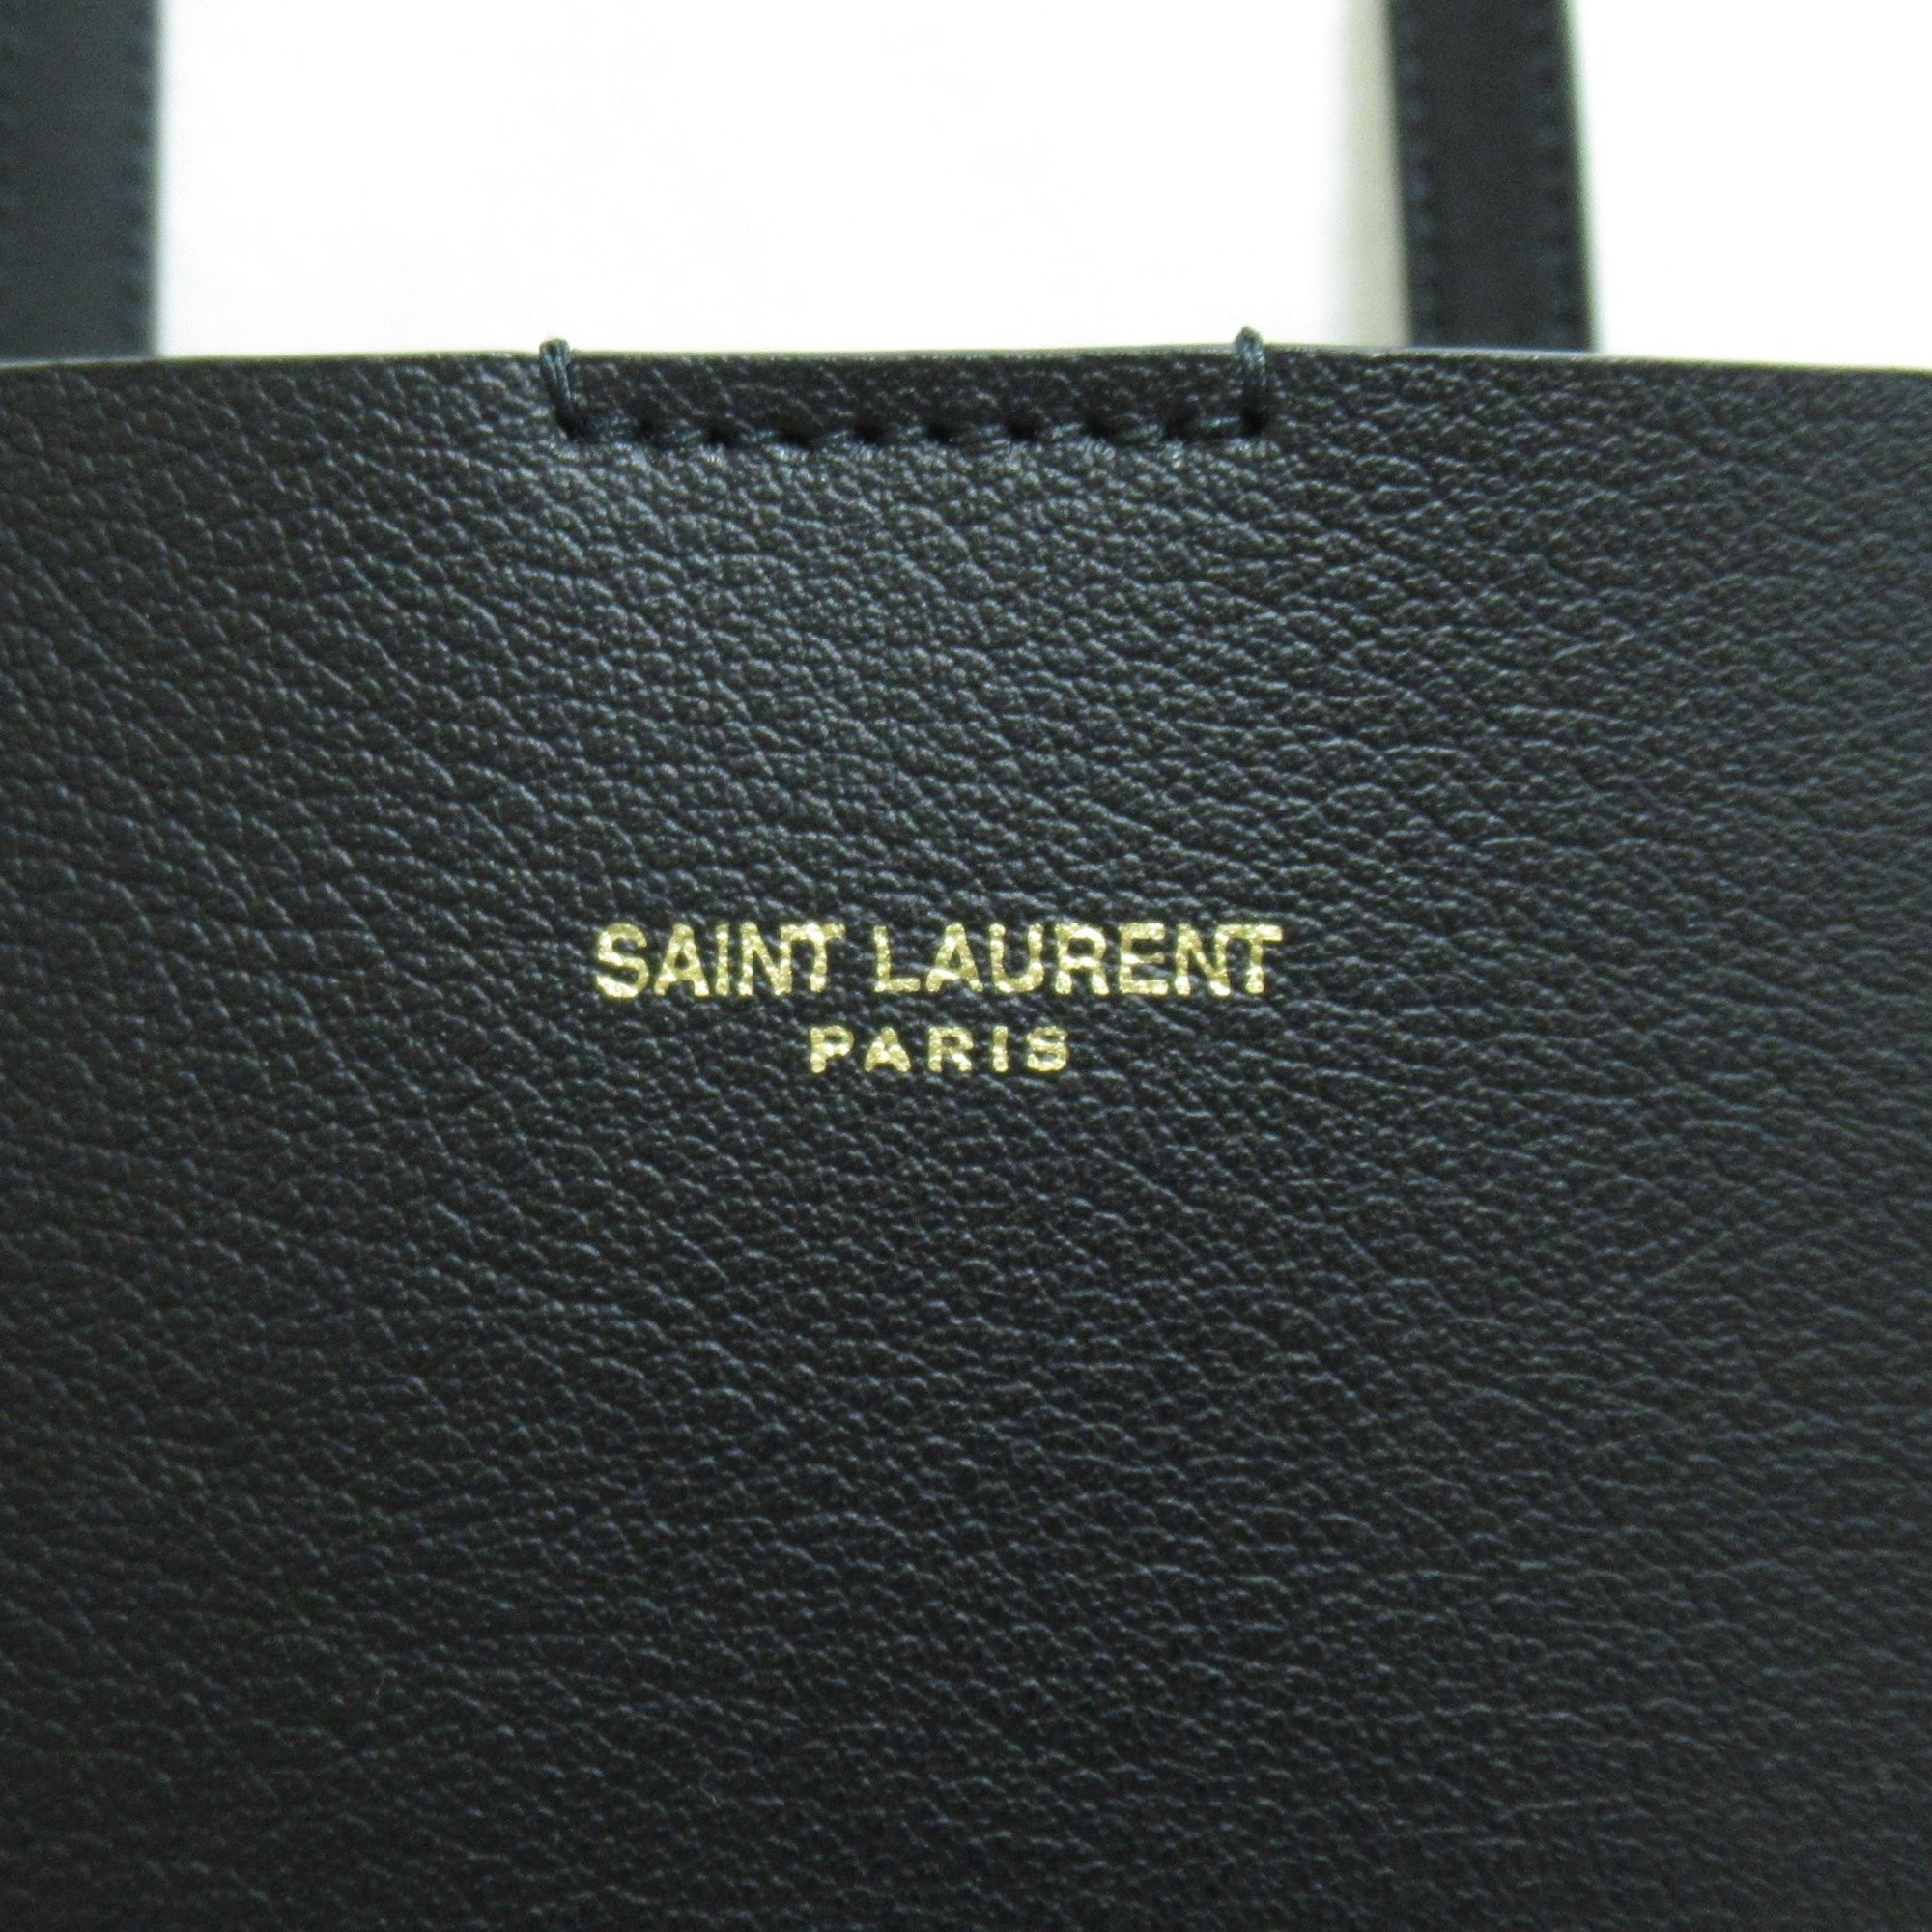 SAINT LAURENT Shopping bag Tote Bag Black Calfskin (cowhide) 600307CSV0J1000